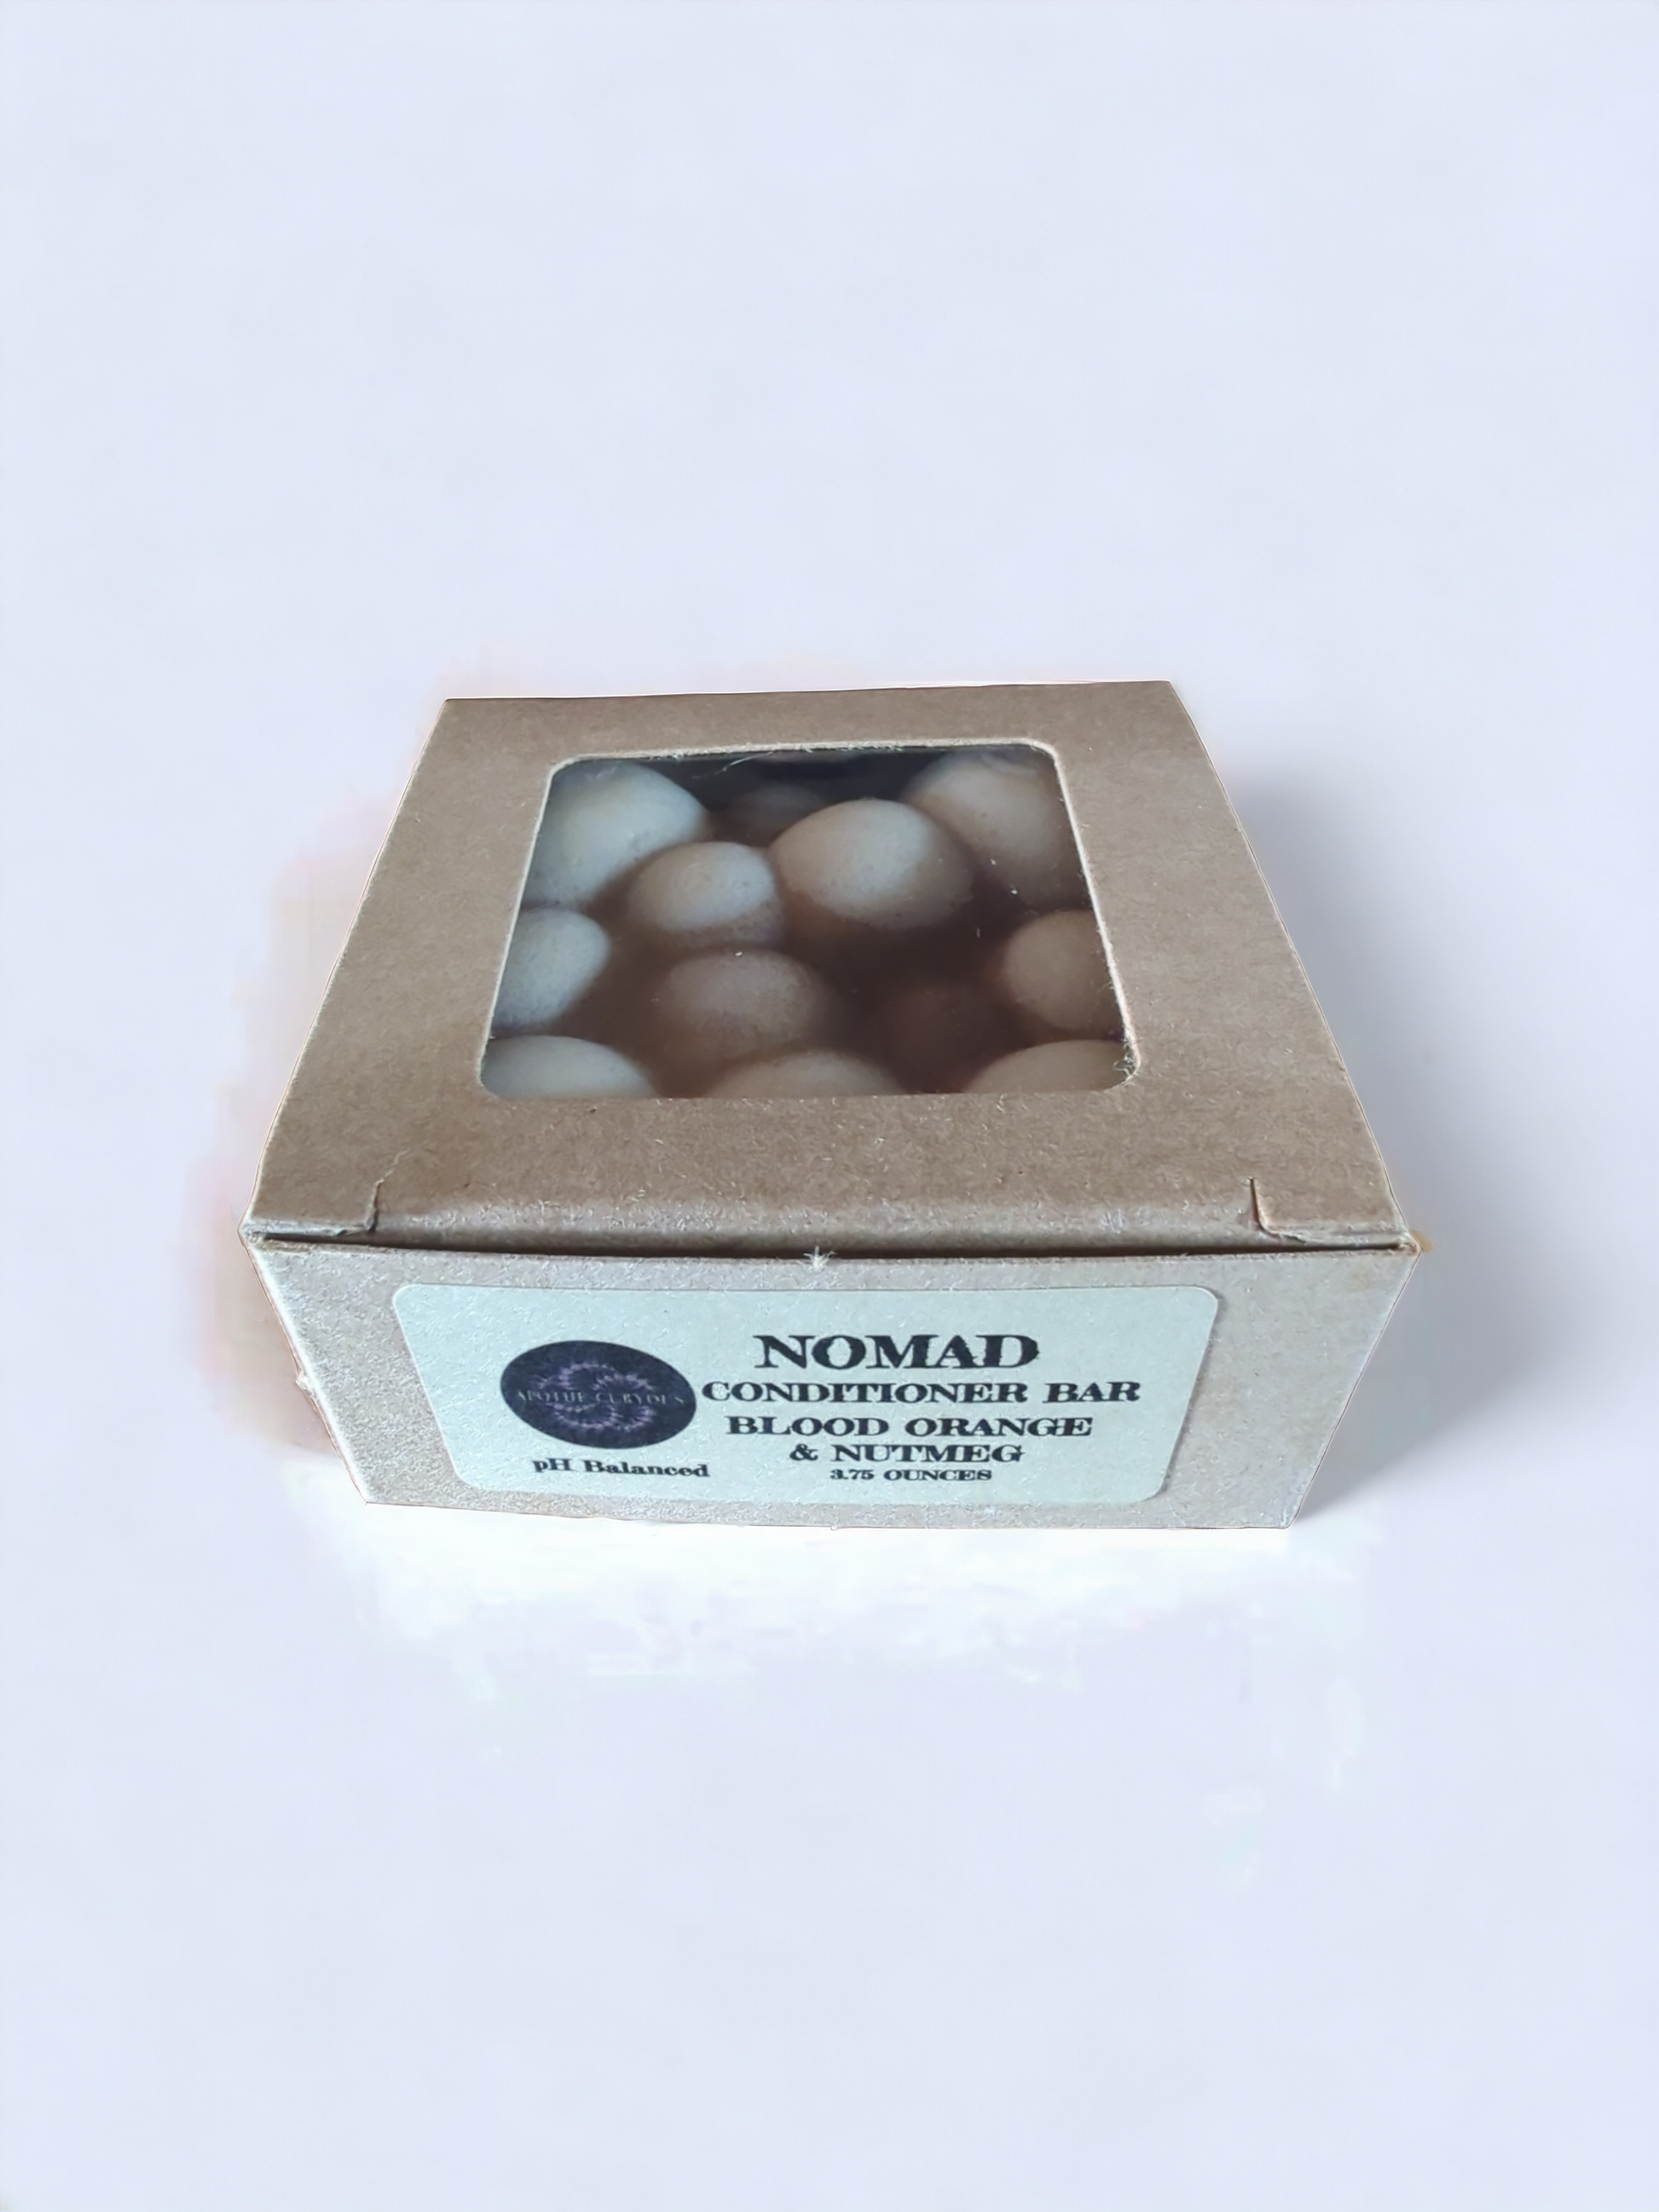 Nomad conditioner bar Blood Orange & Nutmeg in box, Apothecuryous